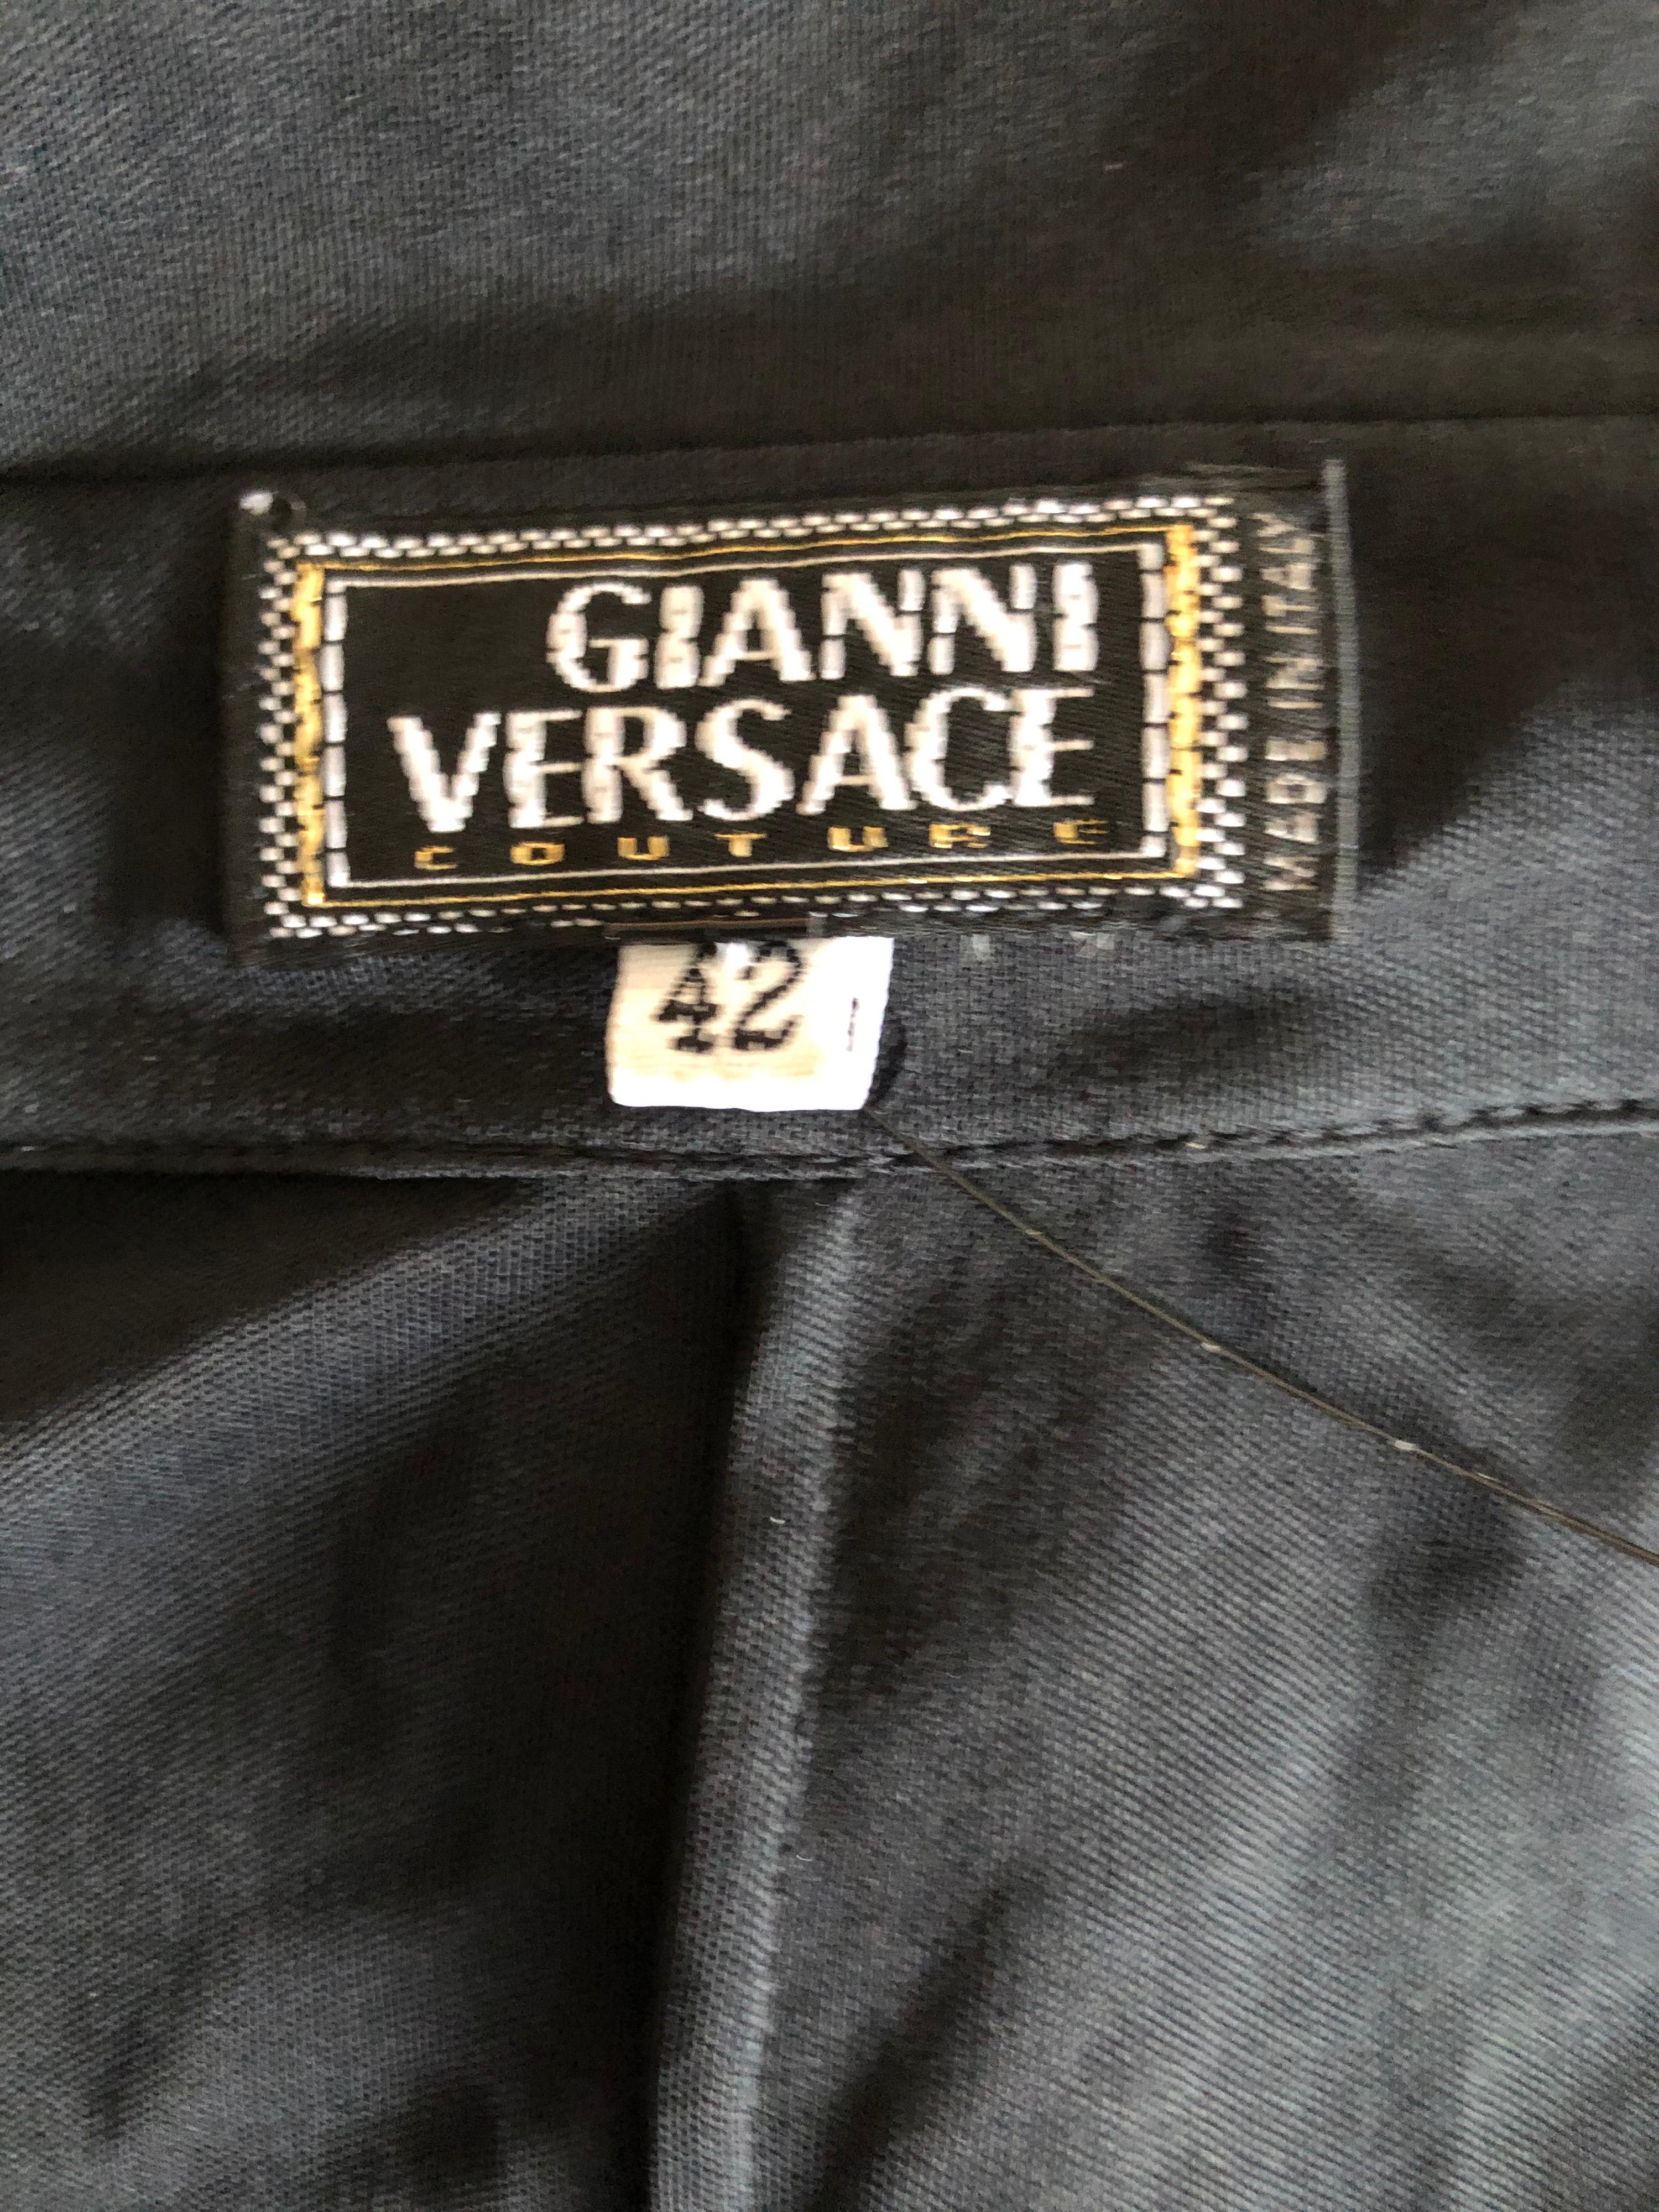 Gianni Versace S/S 2000 Runway Vintage Plunging Neckline Black Dress  For Sale 3